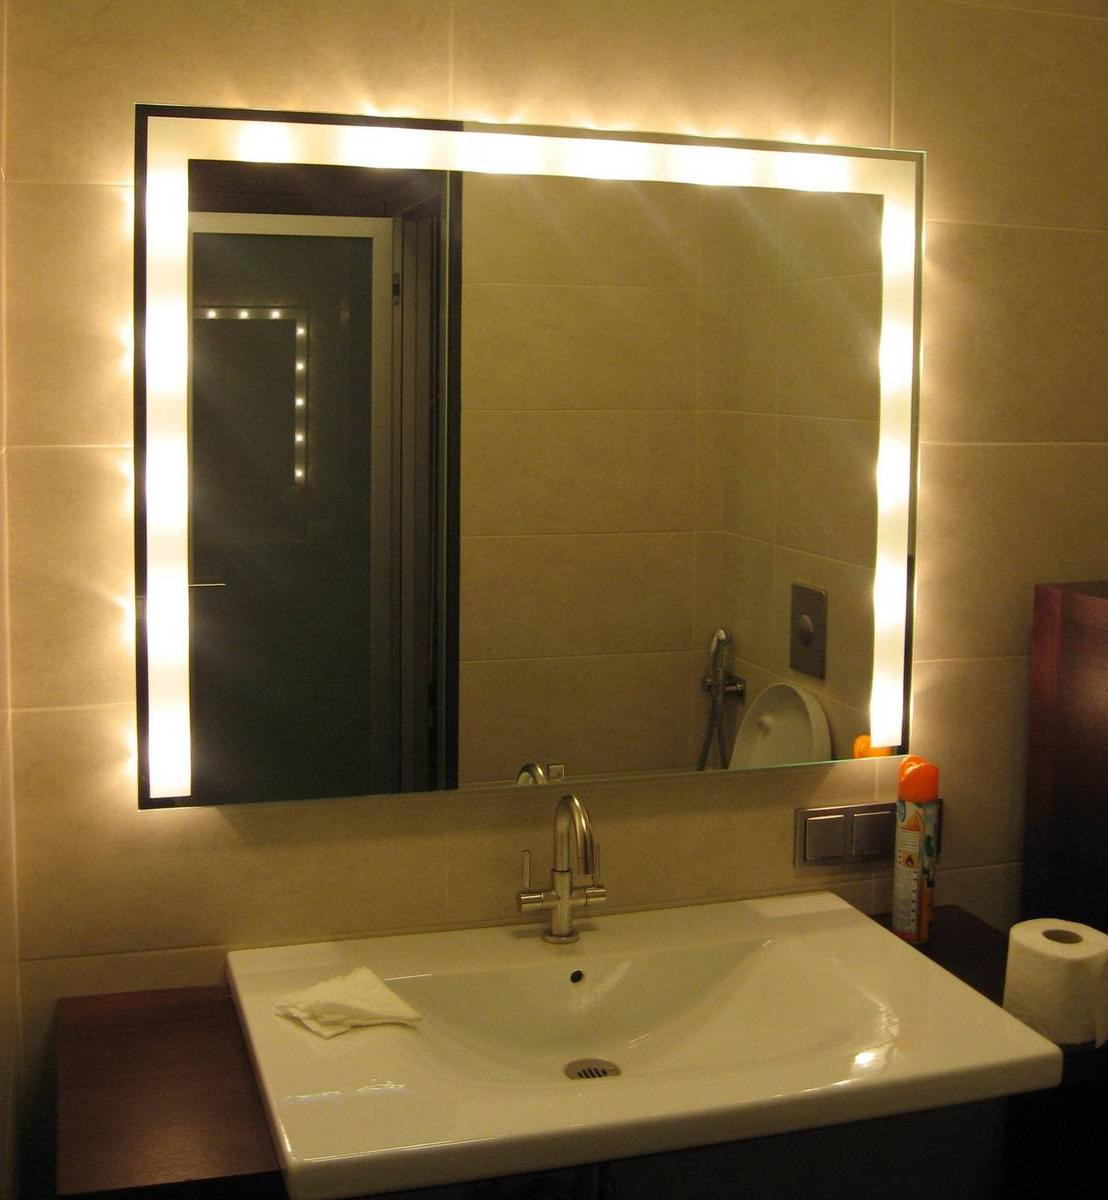 Bathroom Mirror With Lights Behind
 amazing bathroom led lighting design behind square mirror